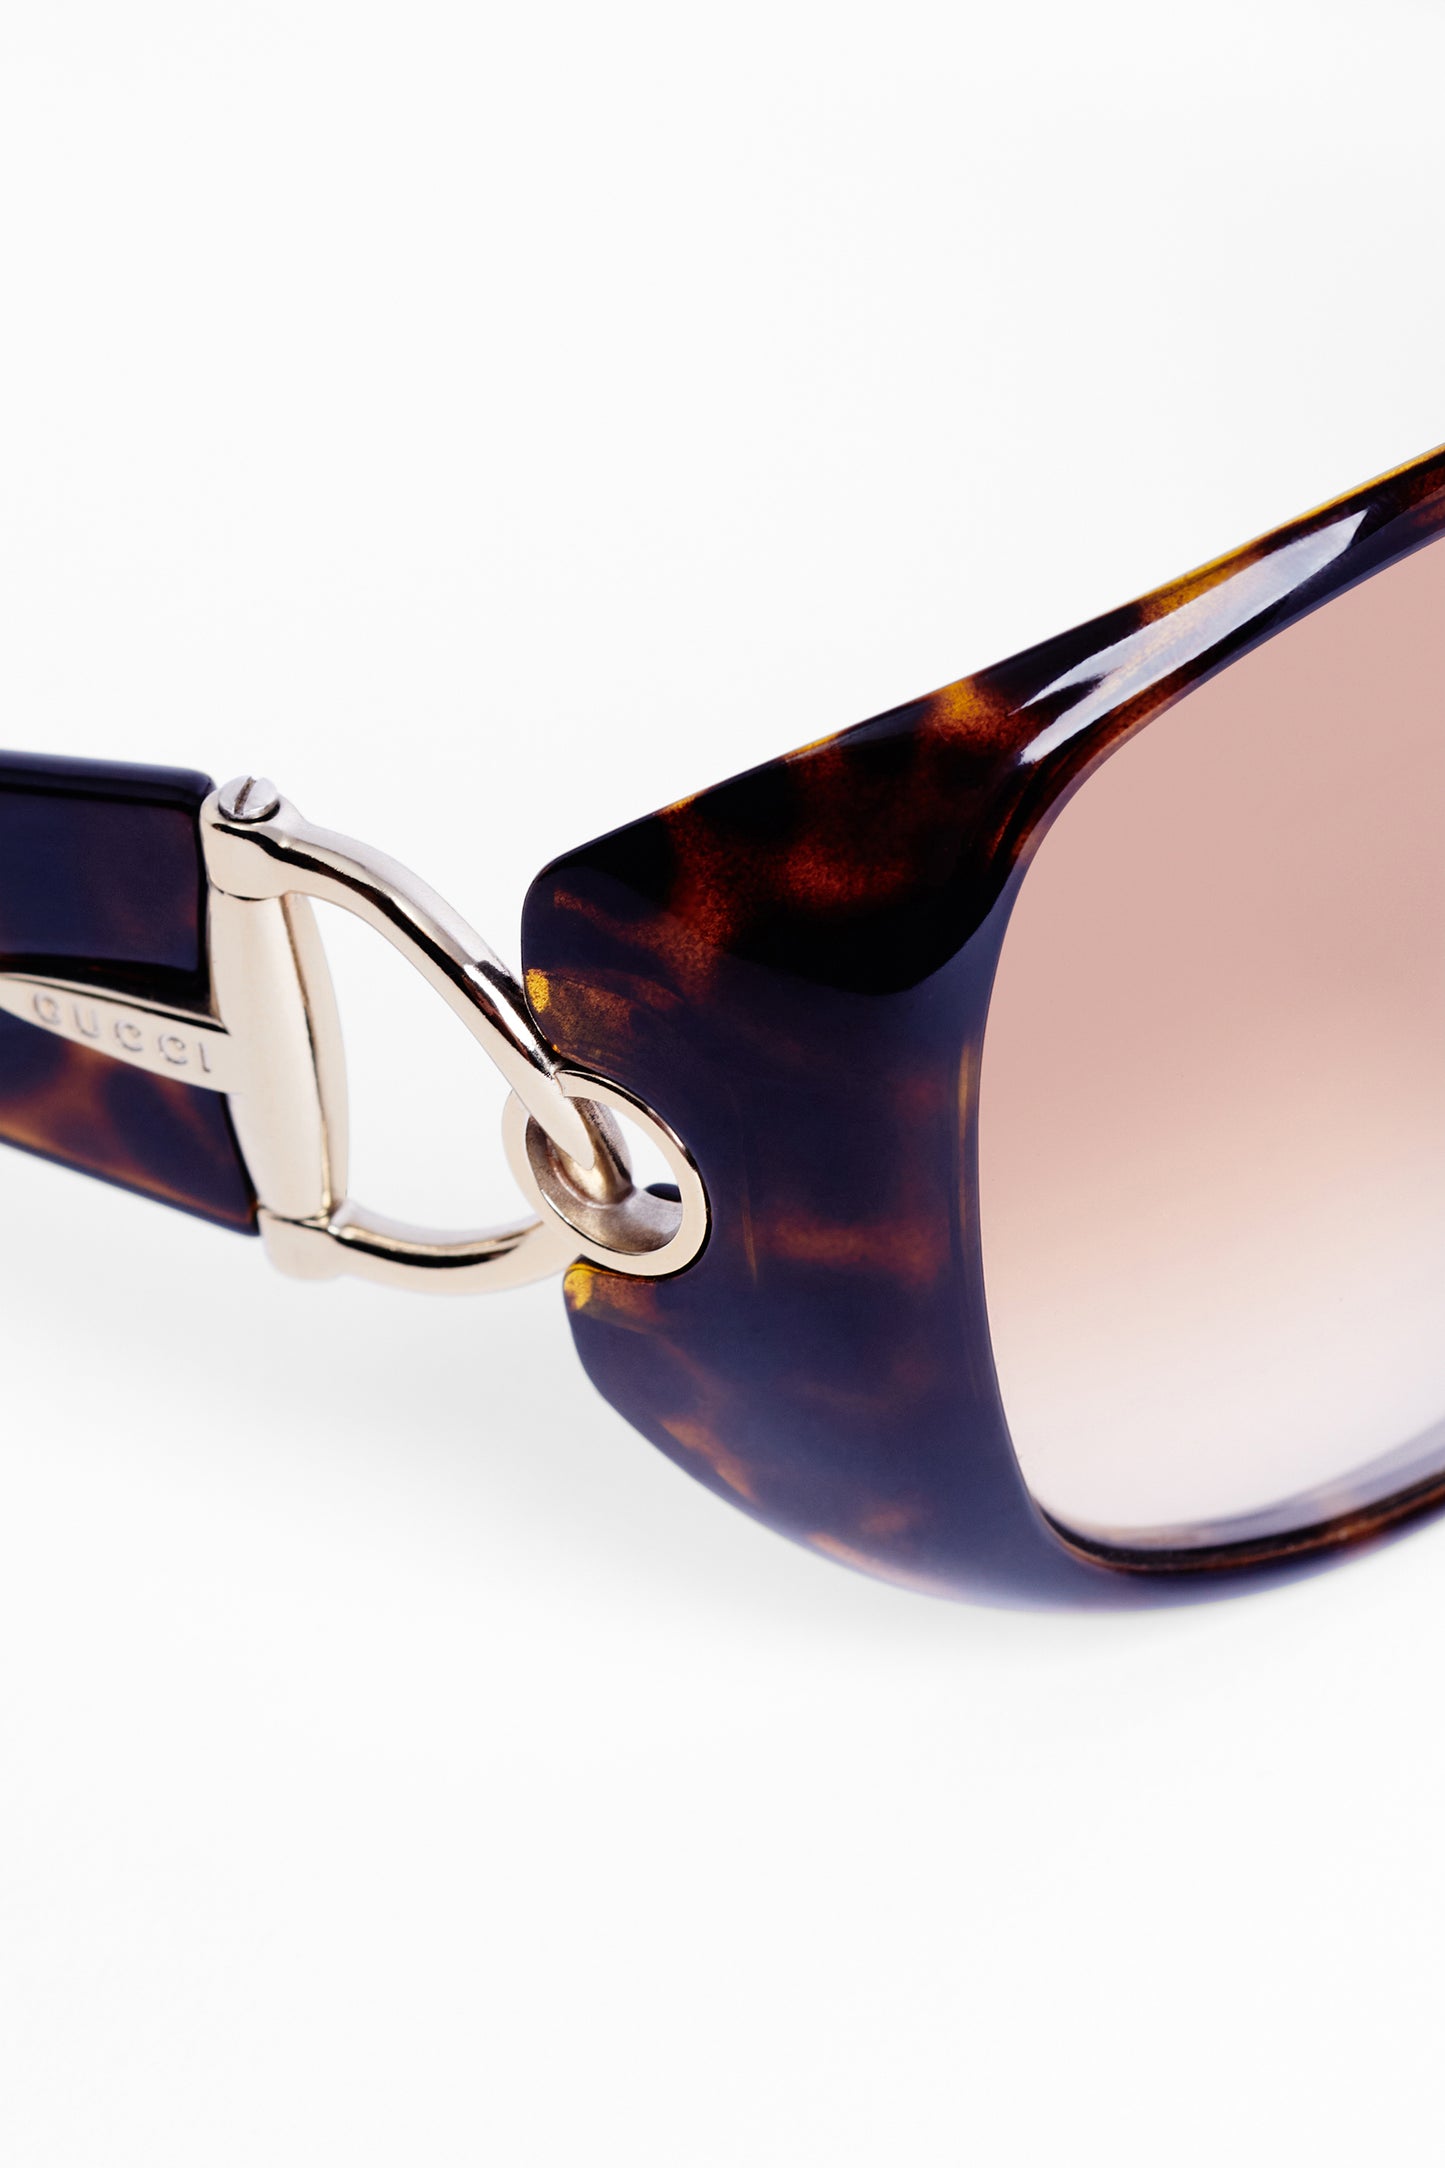 Oversize Oval Tortoiseshell Sunglasses